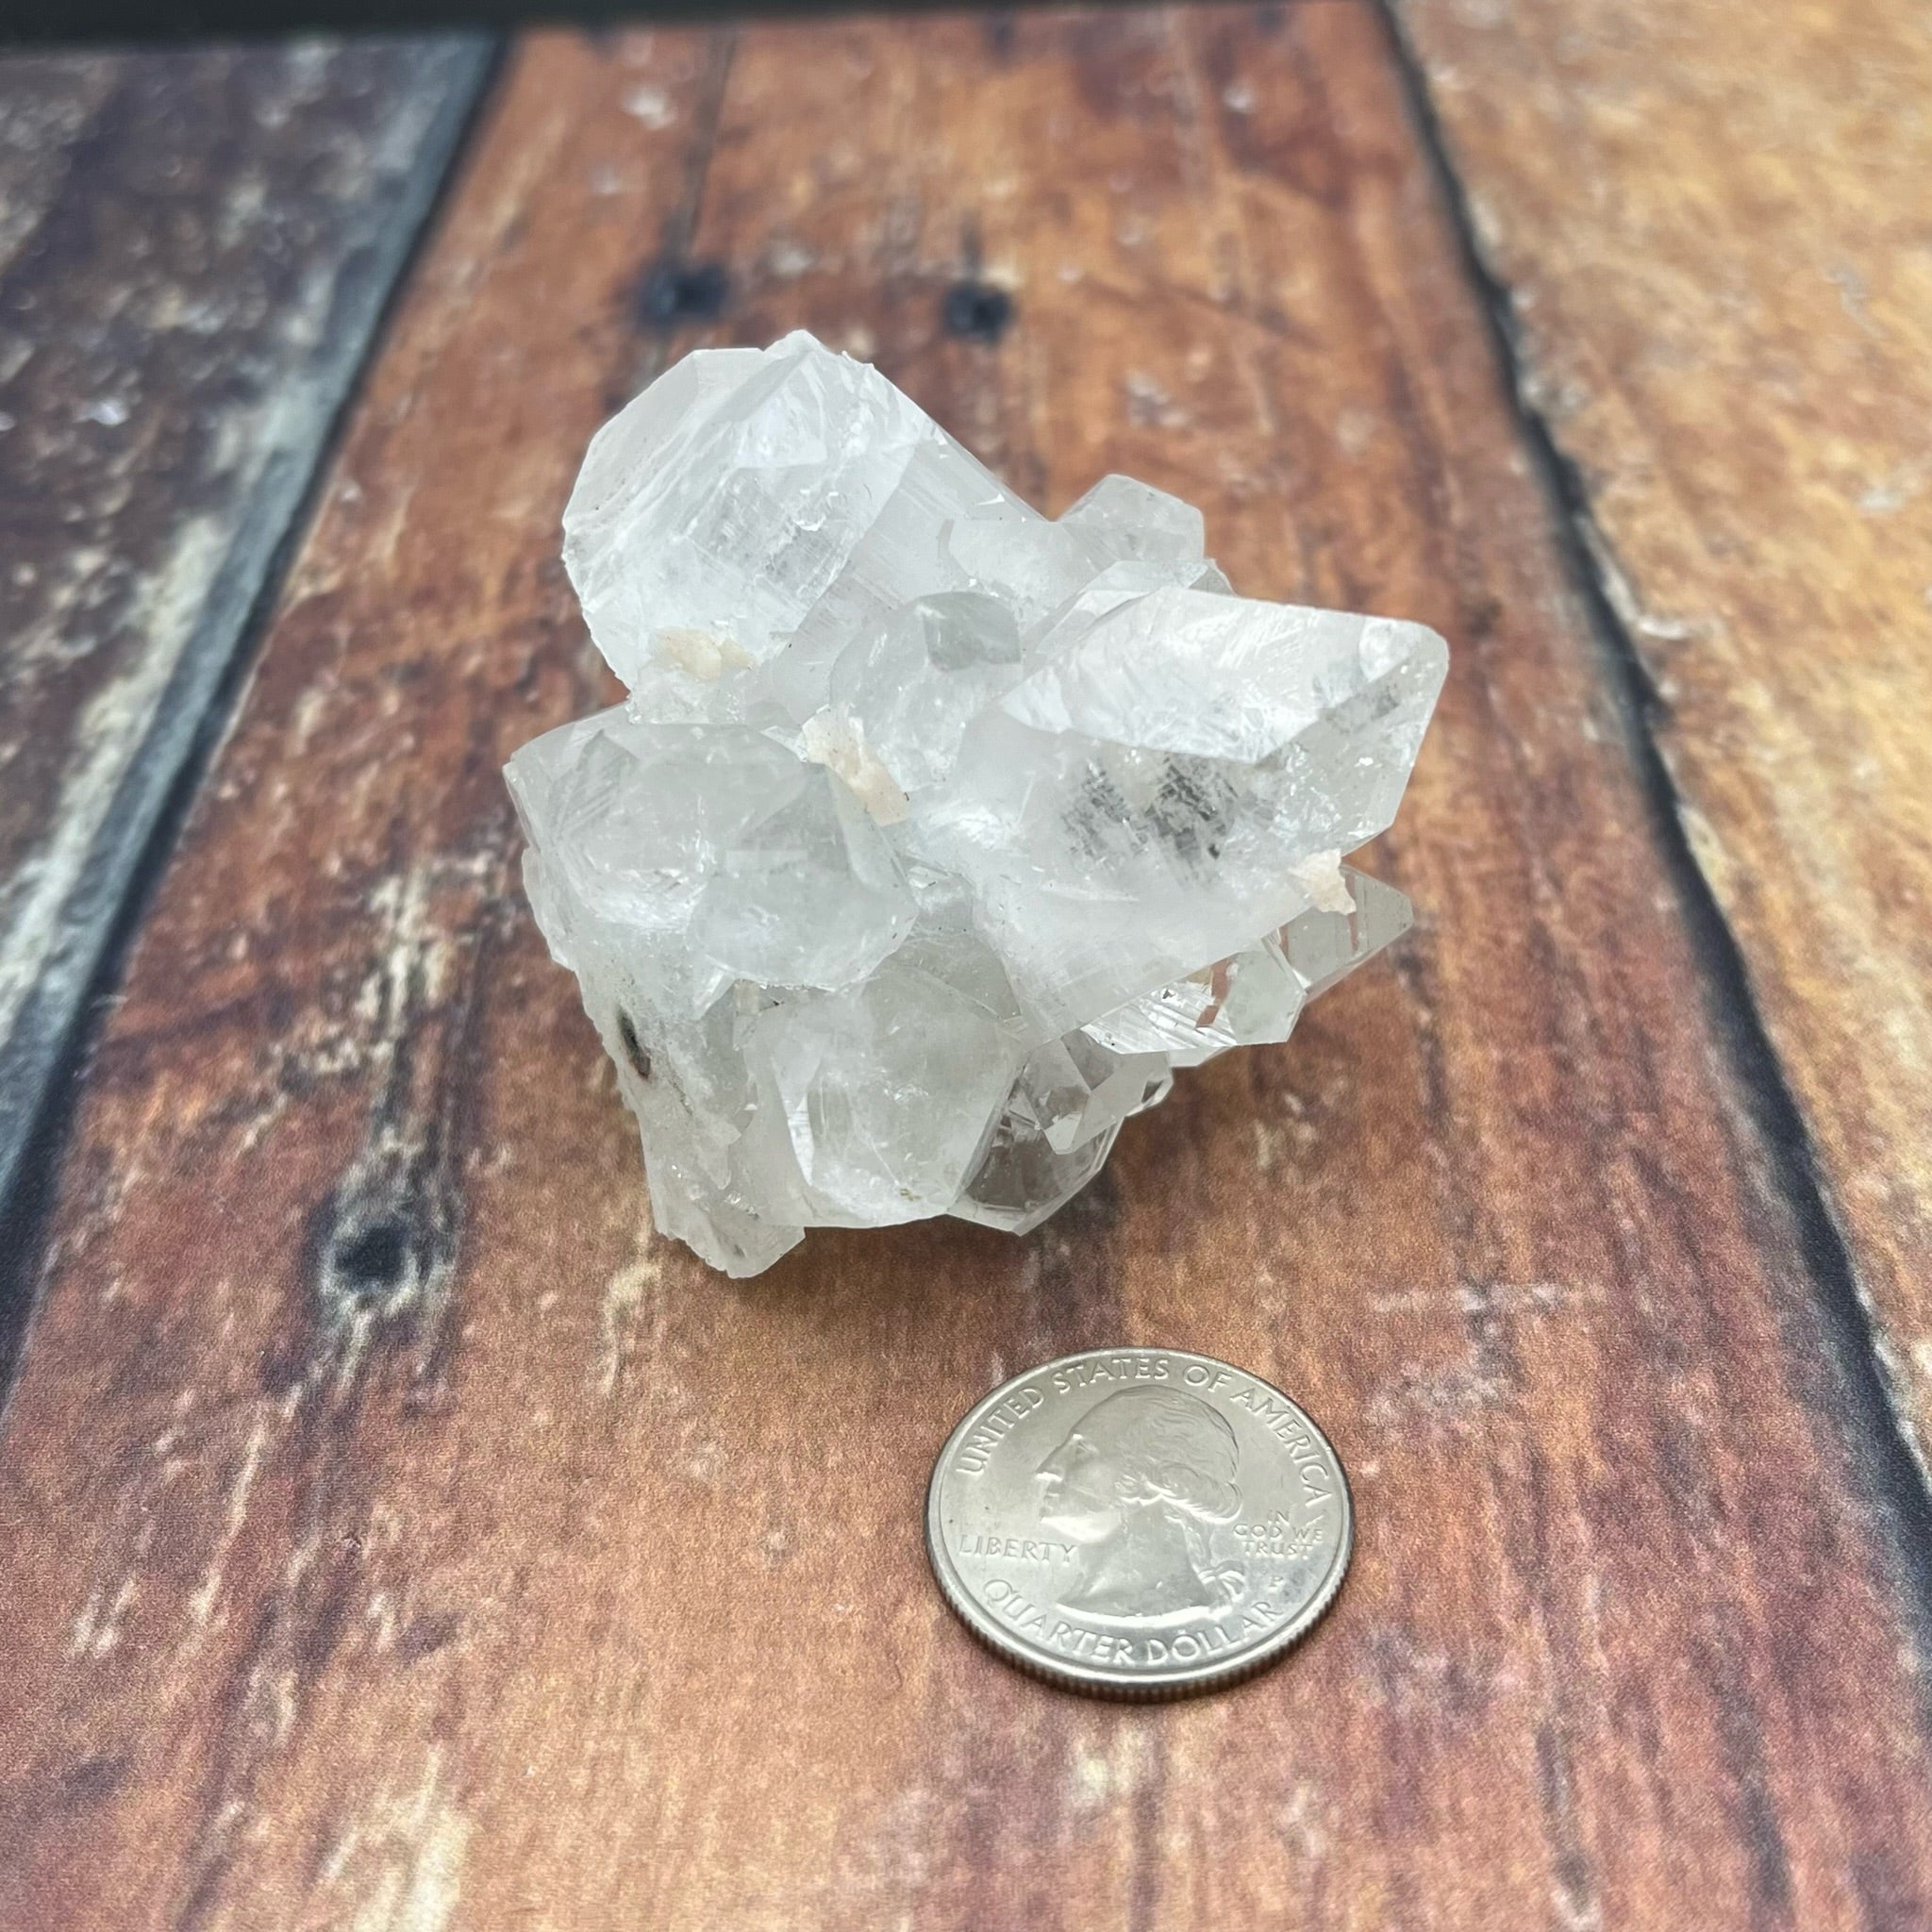 Apophyllite Crystal - 406